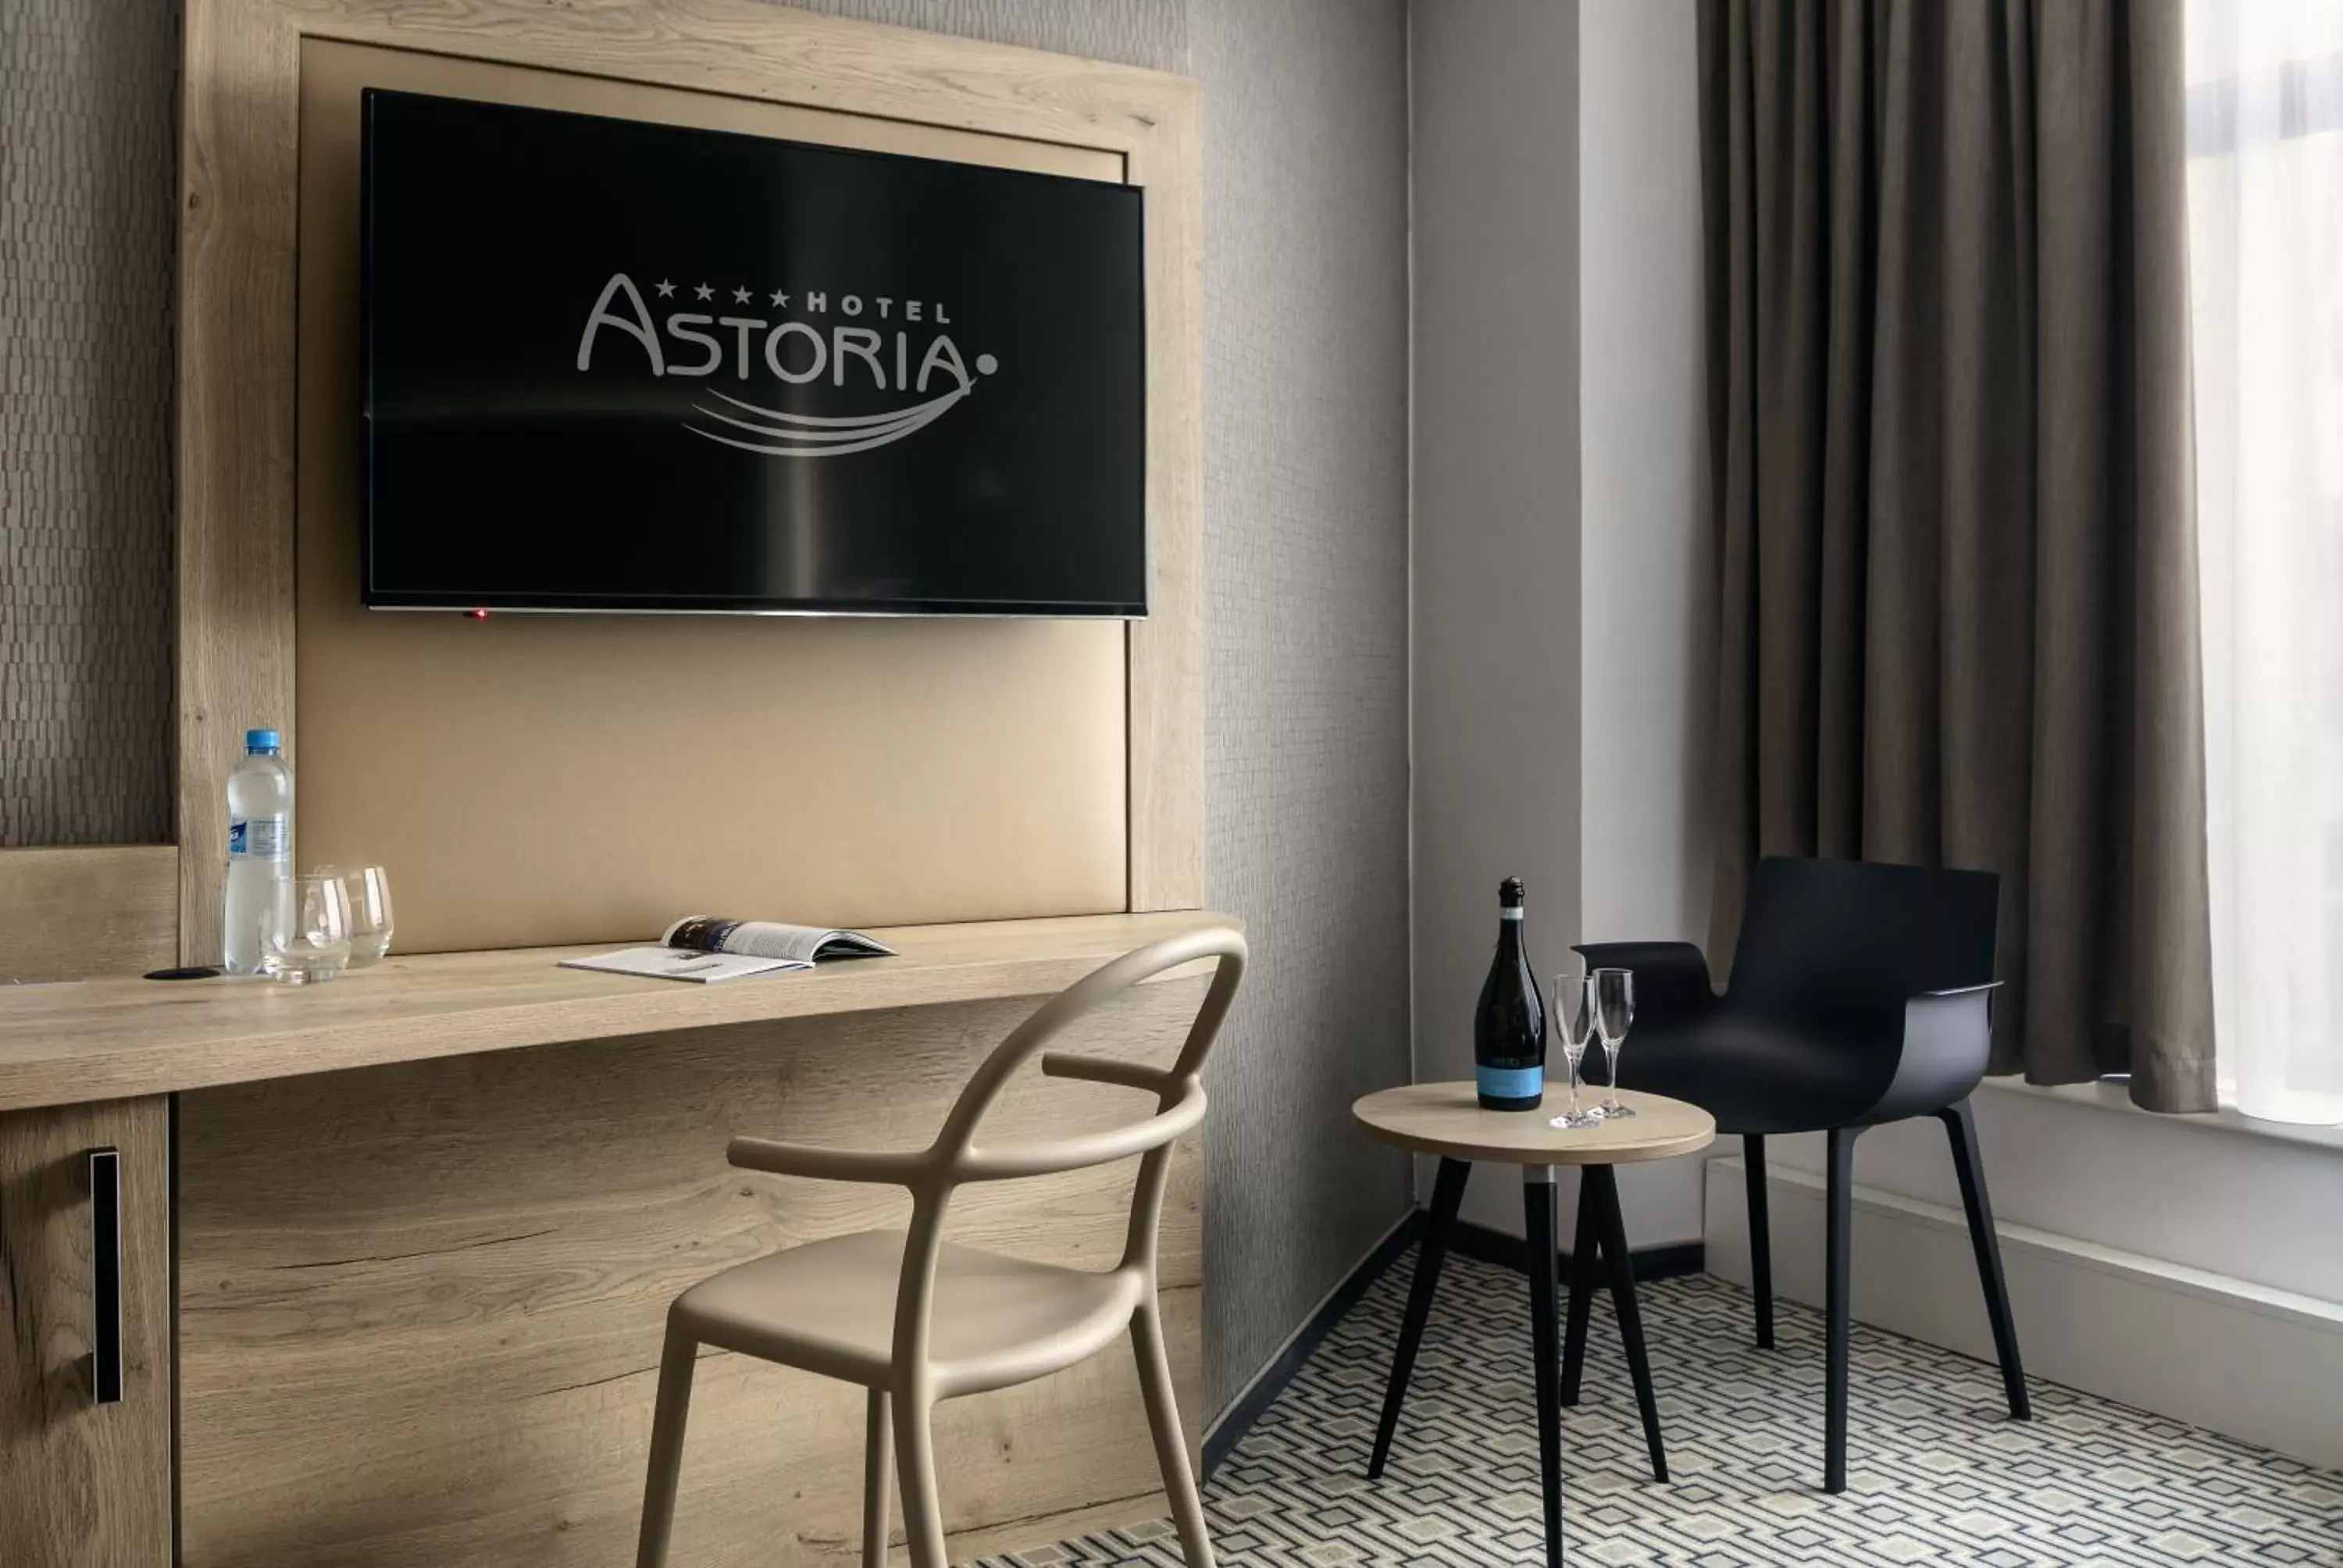 TV and multimedia, TV/Entertainment Center in Astoria Hotel